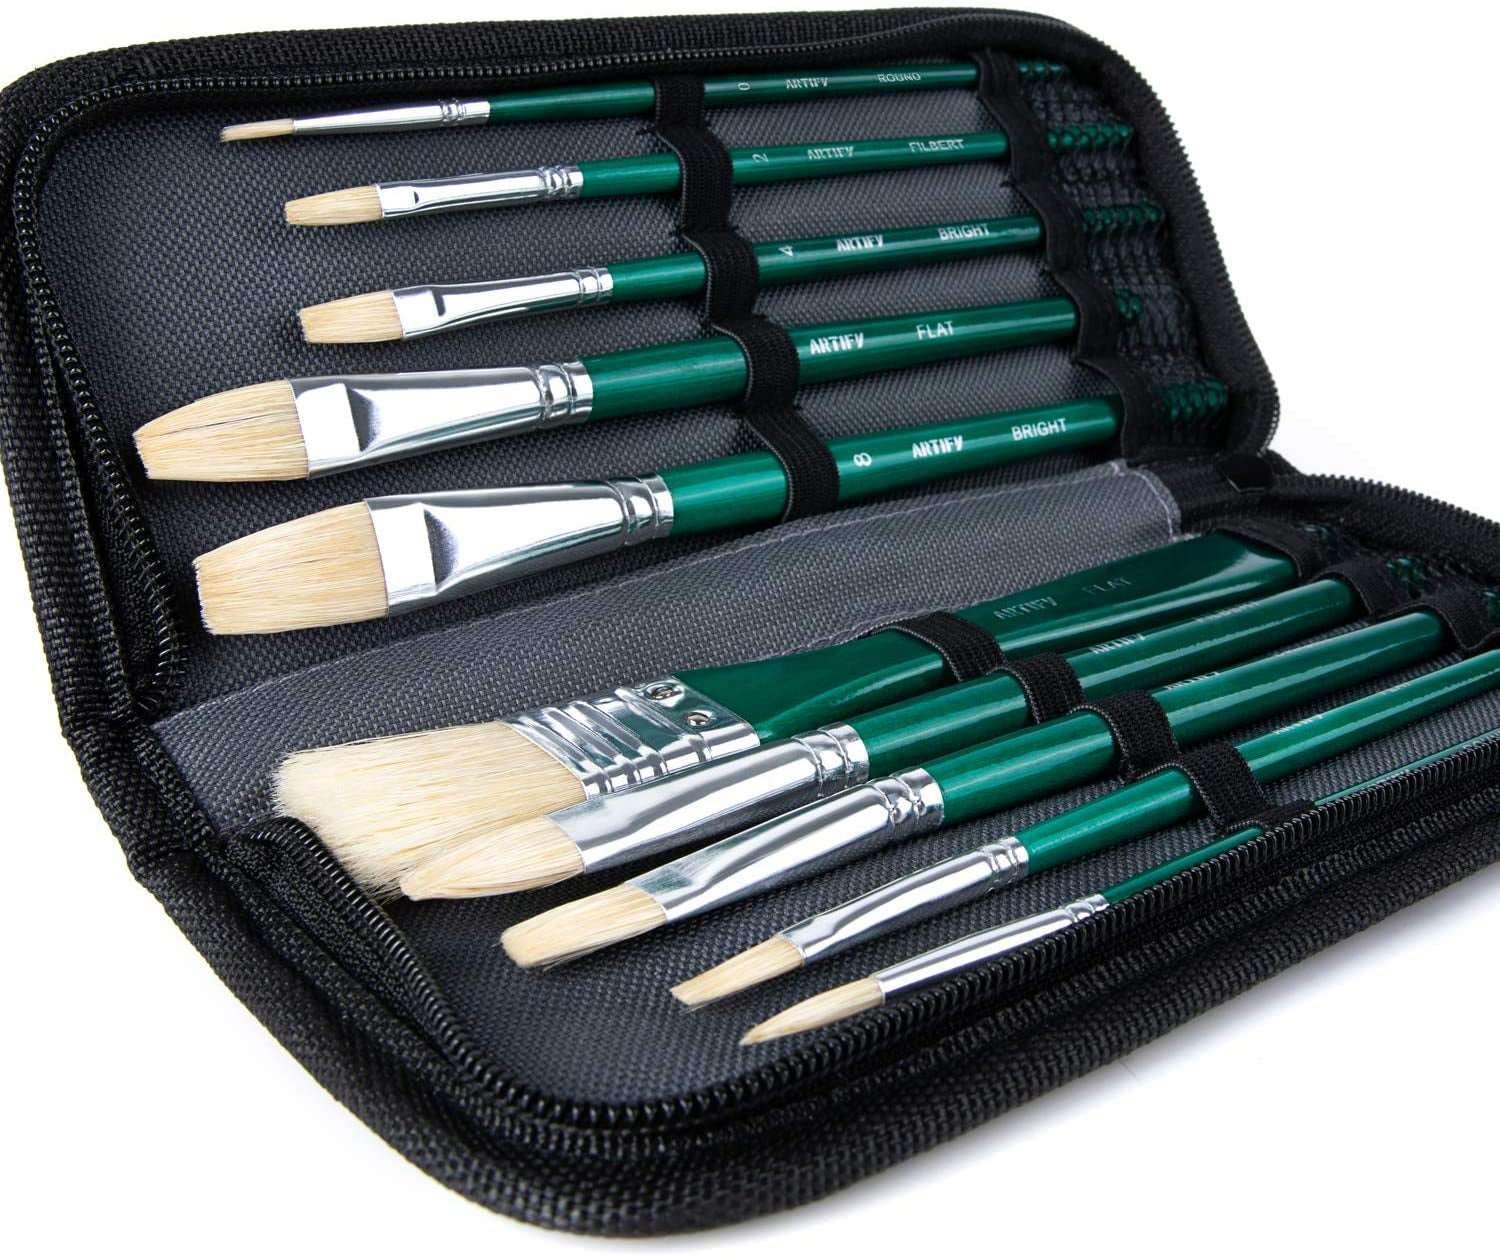 Acrylic Paint Brush Set, 1 Packs / 10 pcs Watercolor Brushes